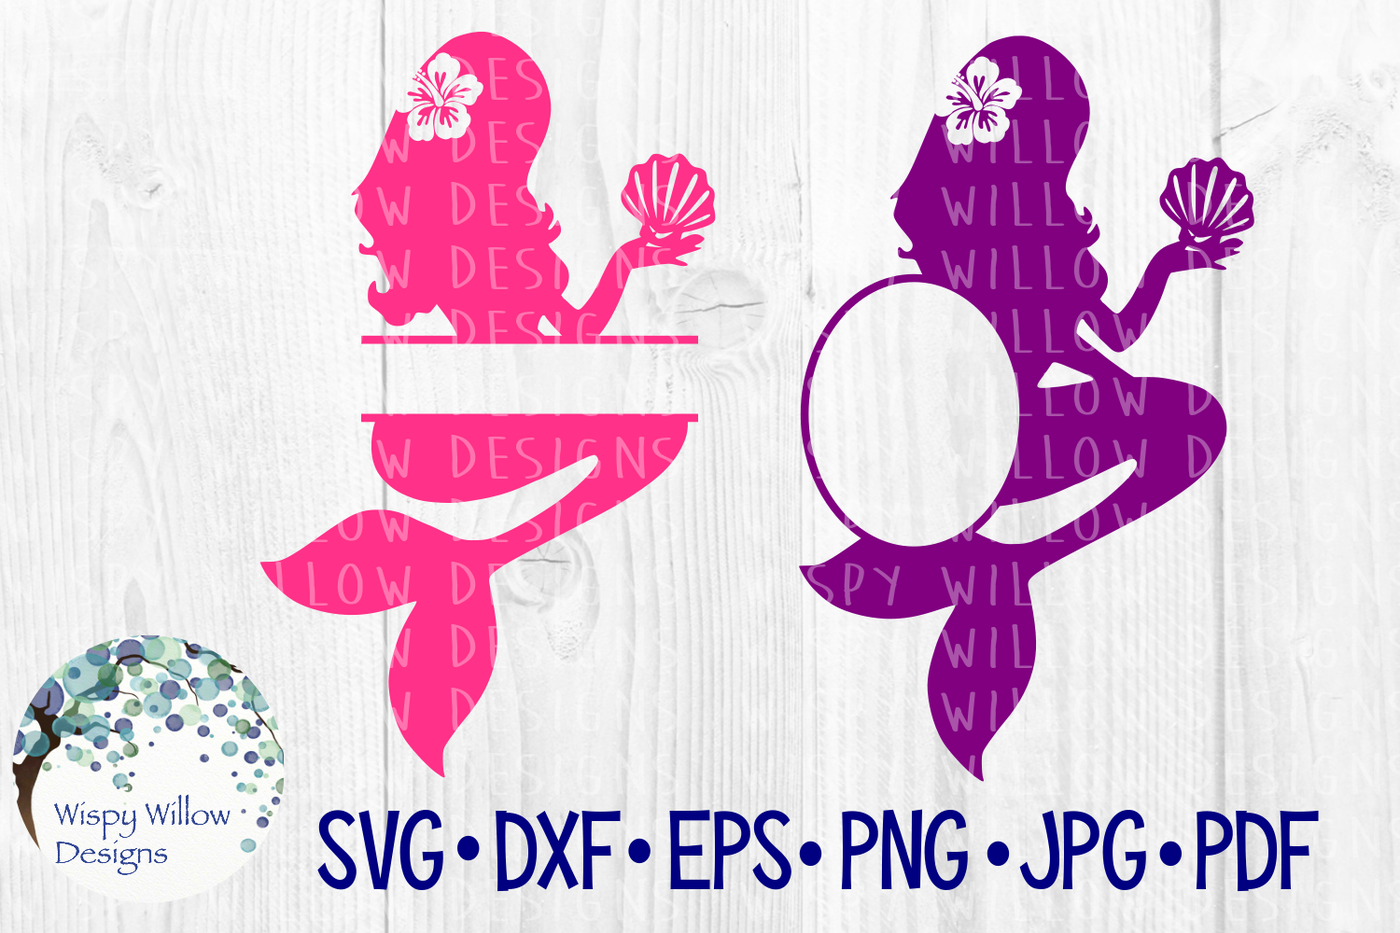 Download Mermaid Monogram Name Frame Border Svg Dxf Eps Png Jpg Pdf By Wispy Willow Designs Thehungryjpeg Com